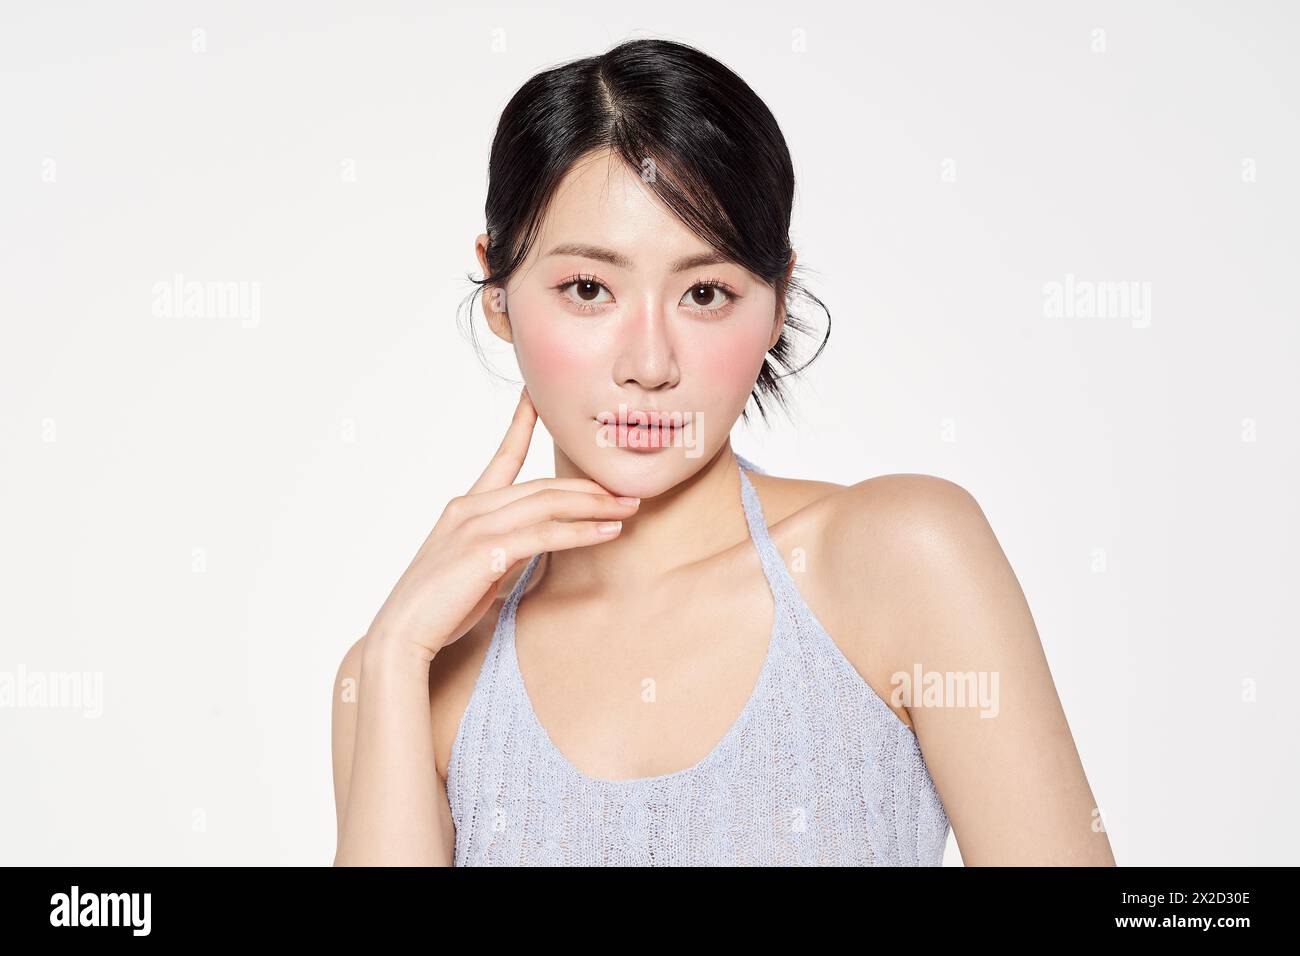 Asian woman posing with summer cool tone makeup Stock Photo